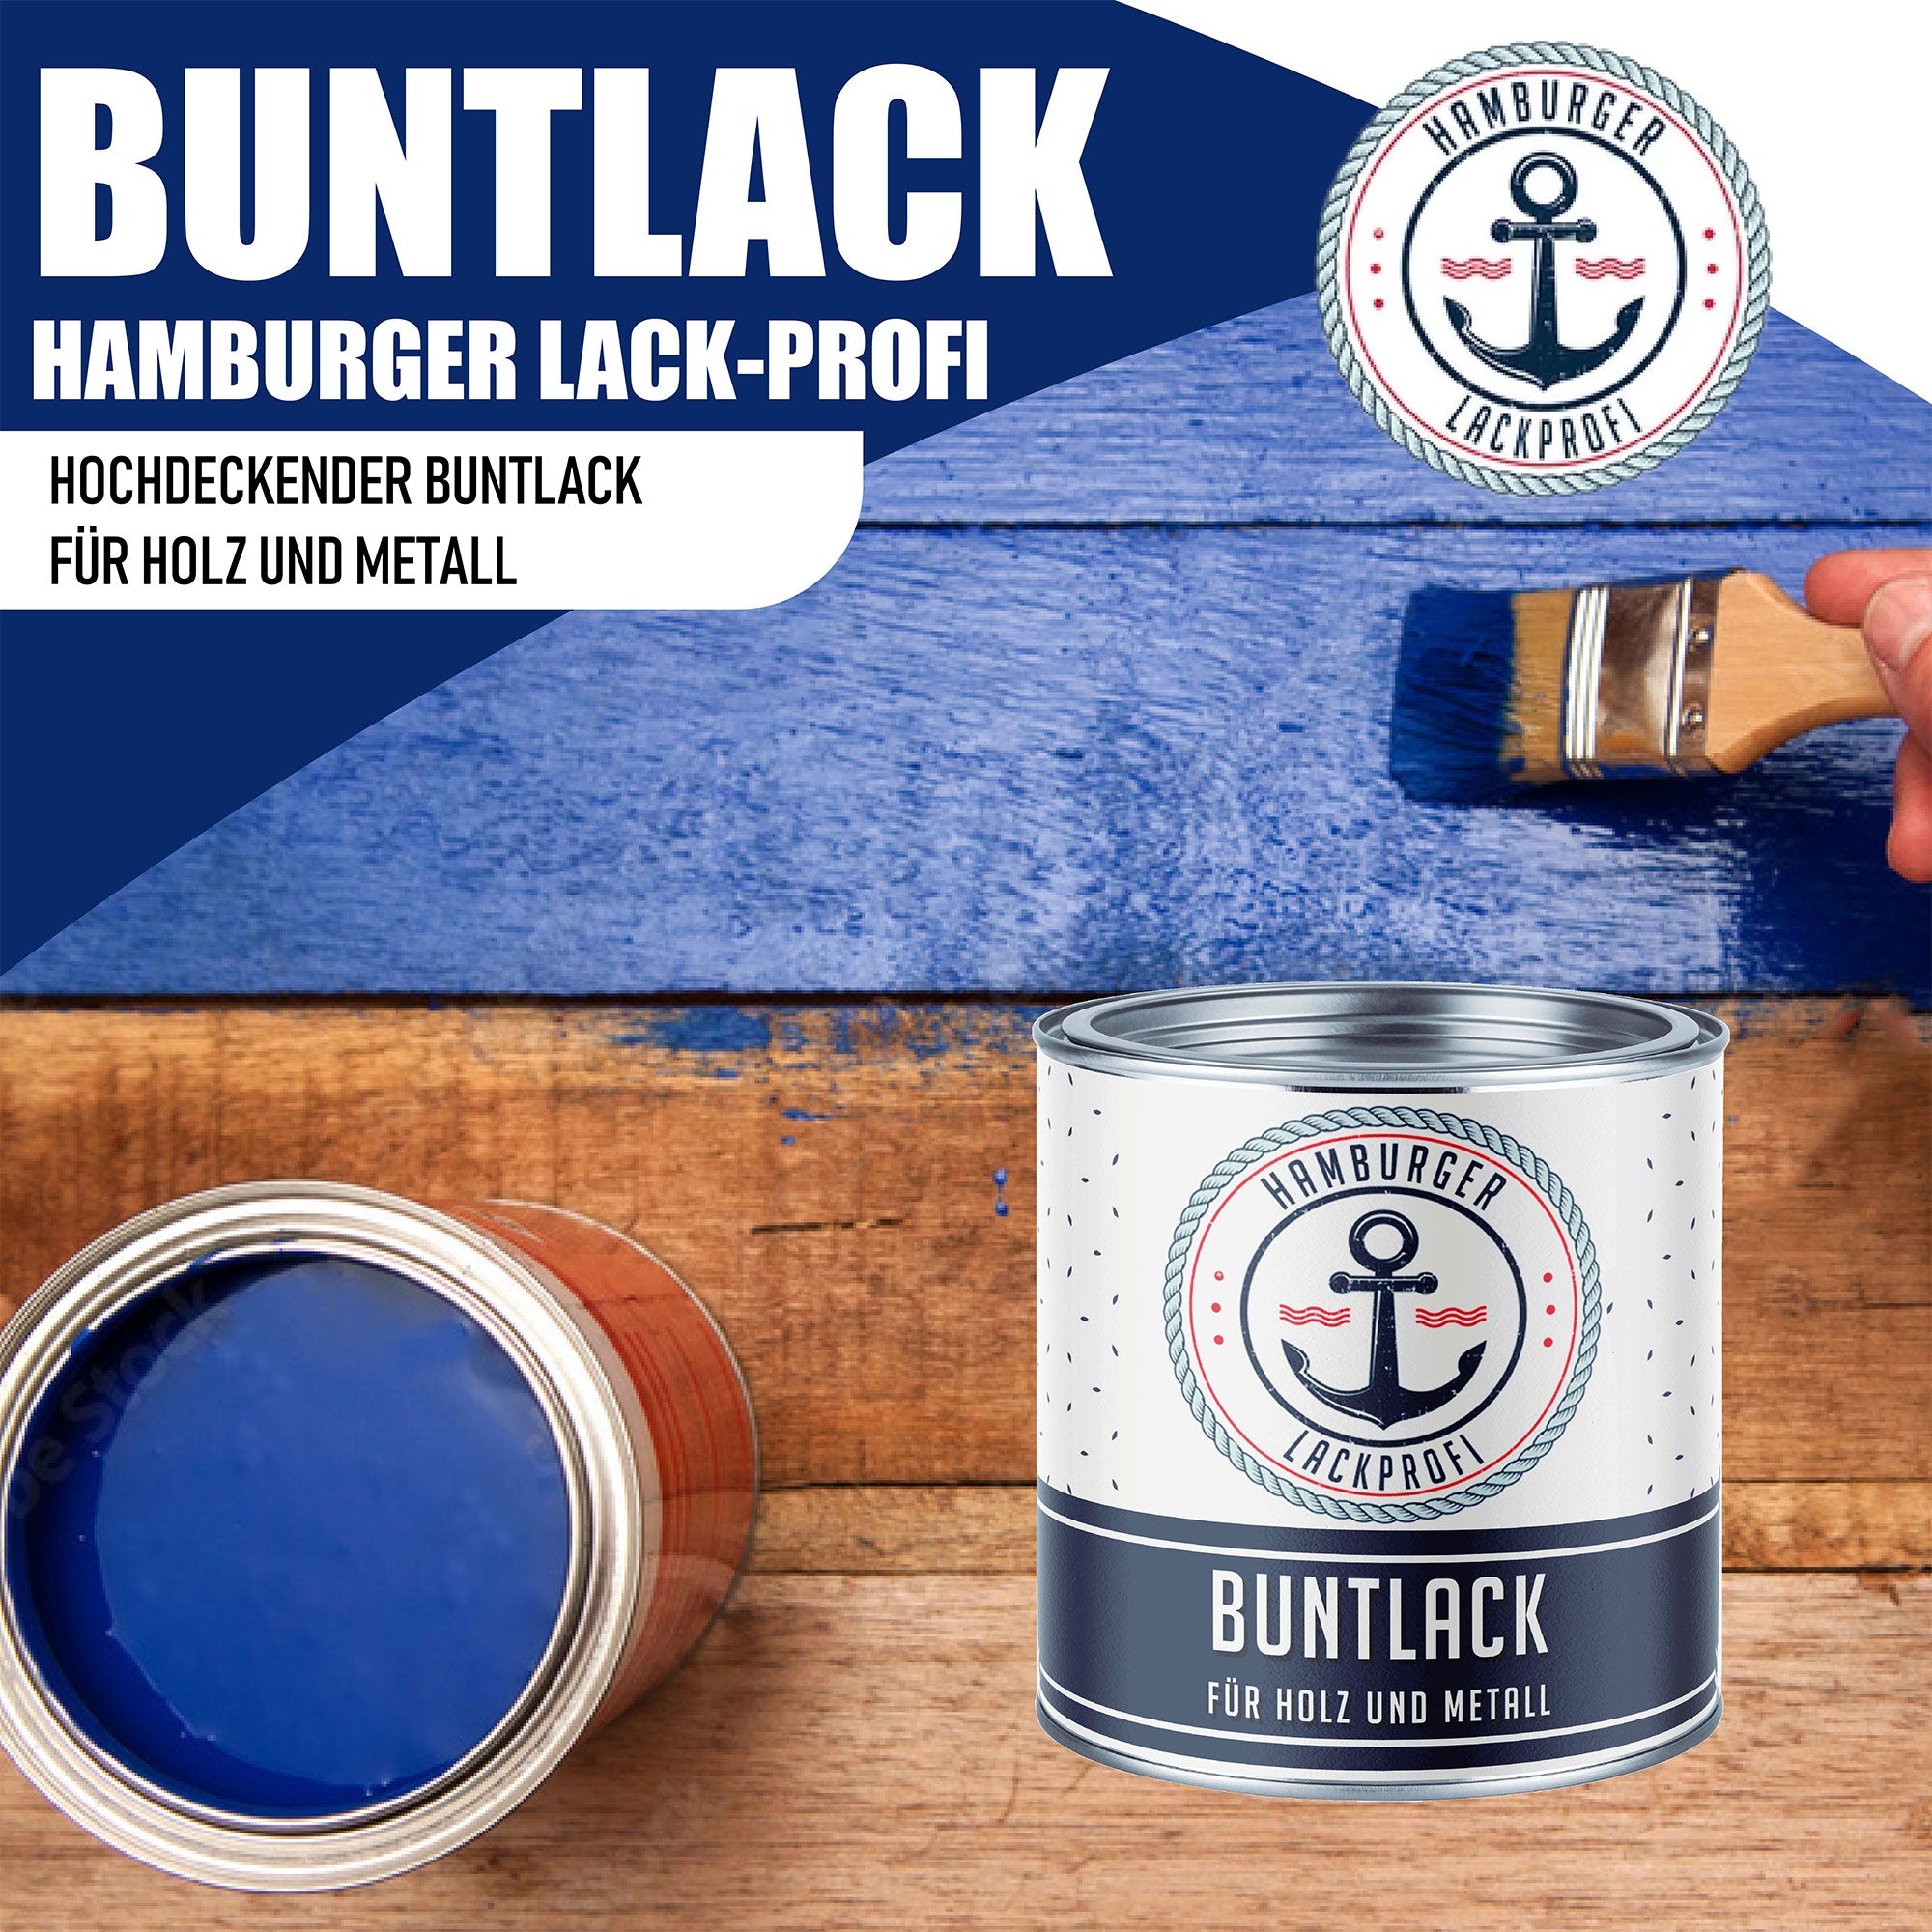 Hamburger Lack-Profi Buntlack Rubinrot RAL 3003 - Robuster Kunstharzlack